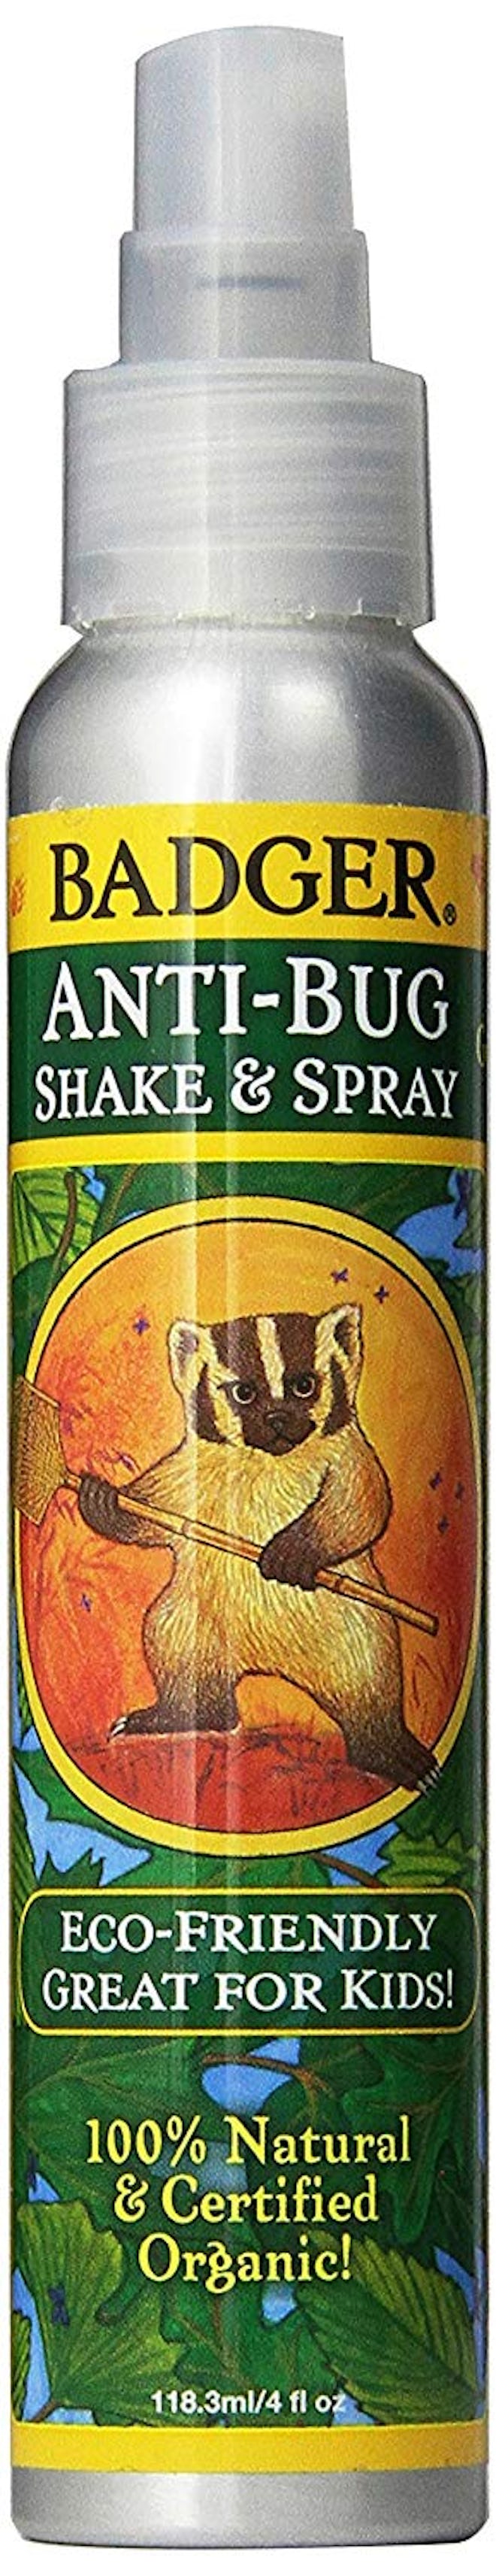 Badger Anti-Bug Shake & Spray (4 Fl. Oz)